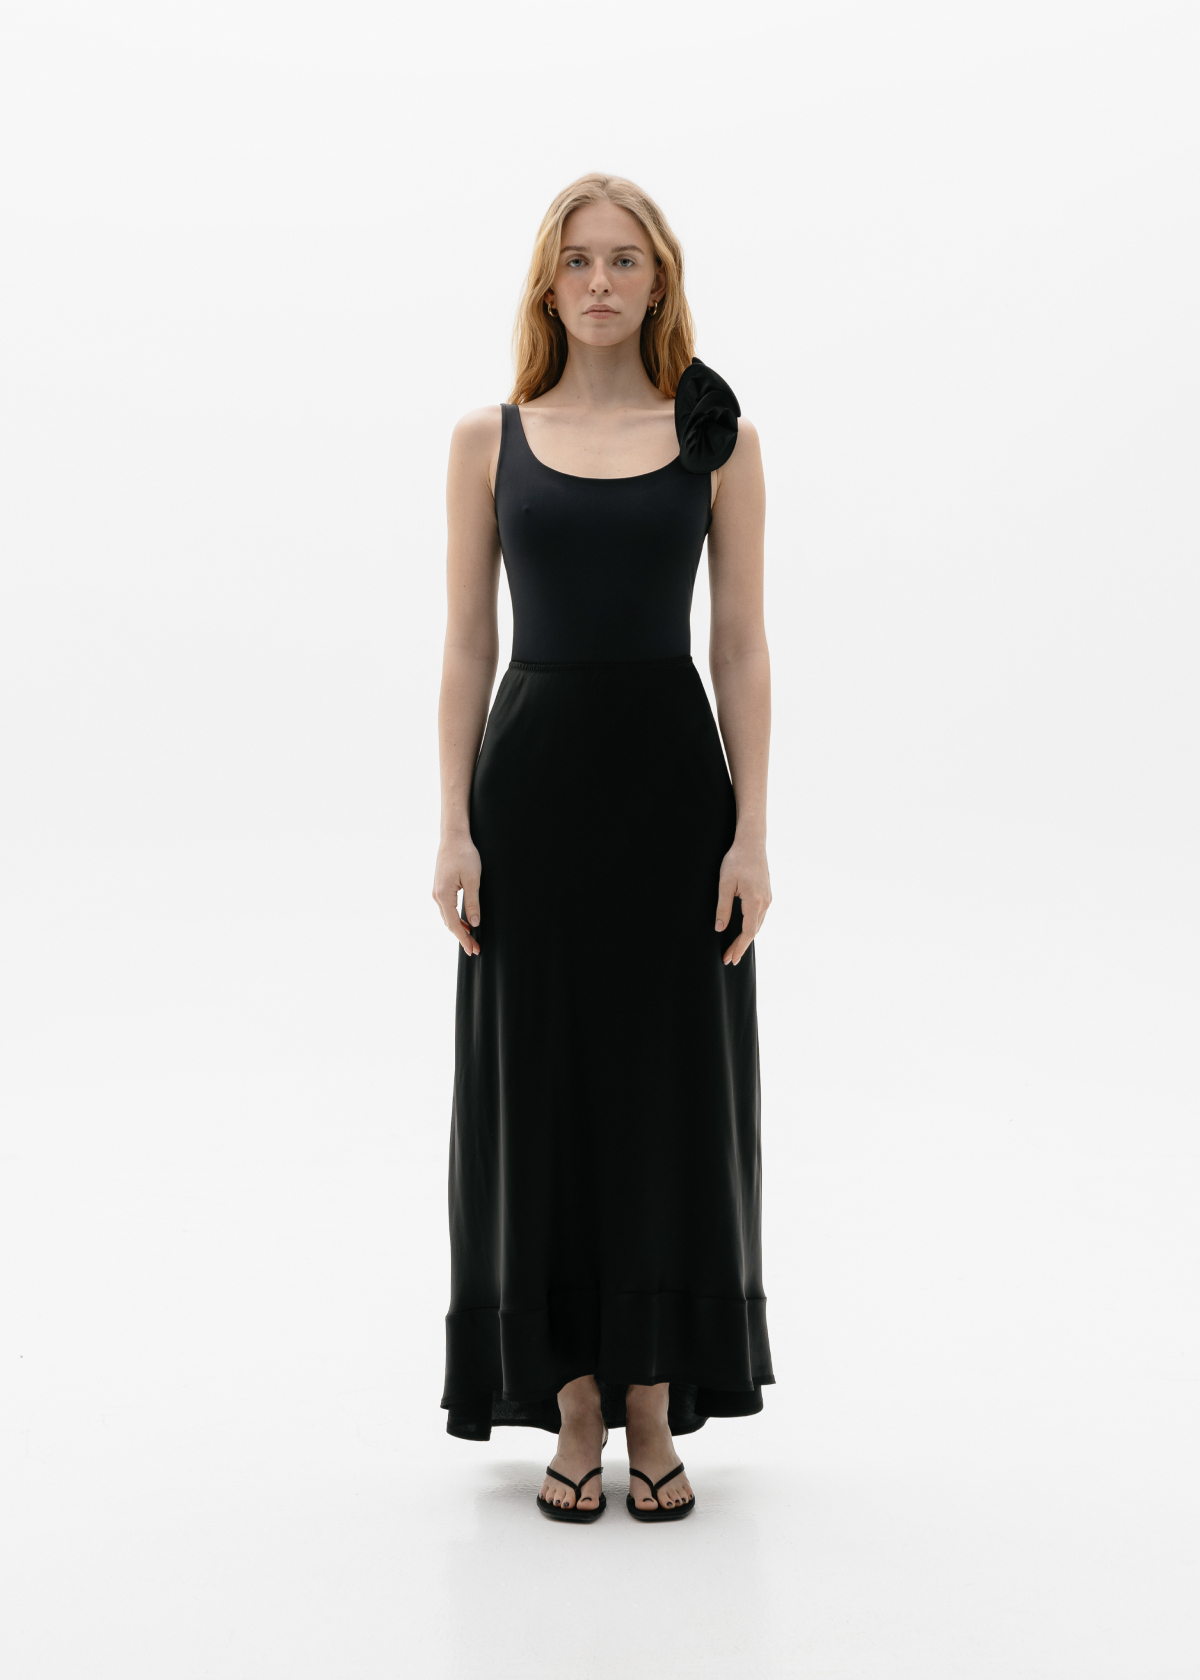 Ruffled midi skirt in black